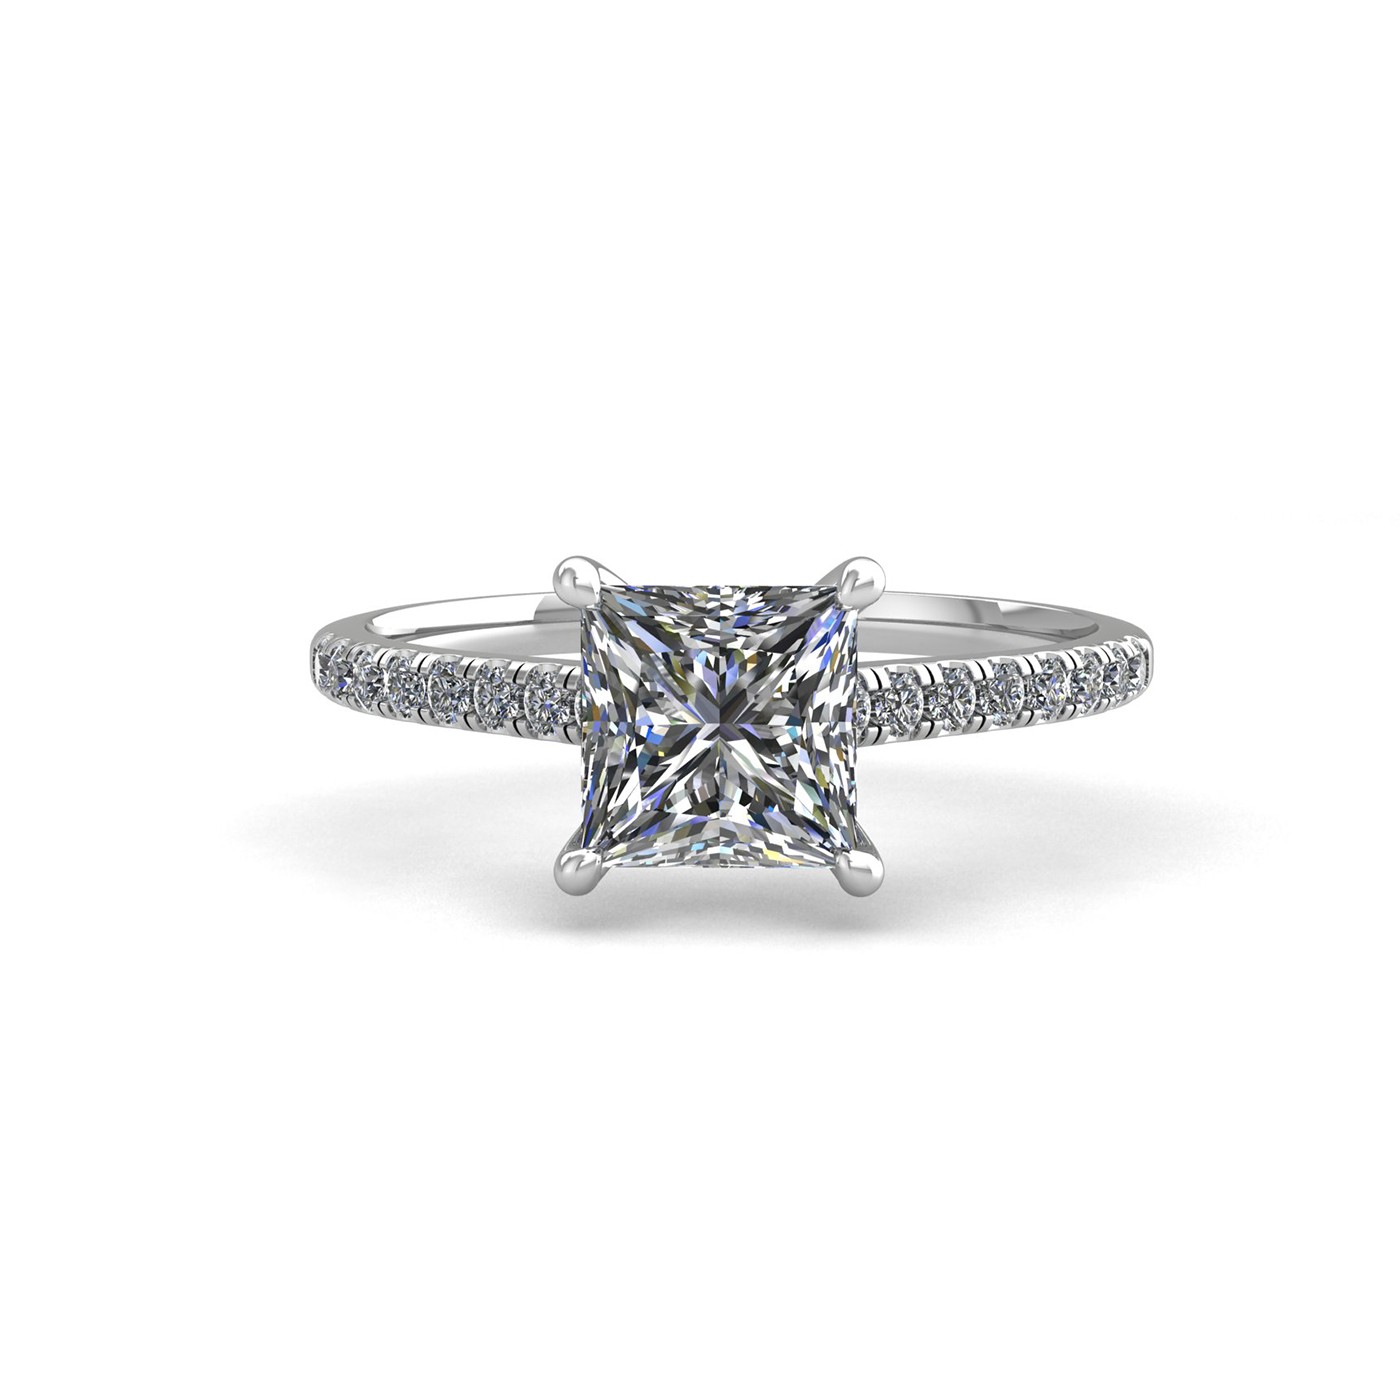 18k white gold 1,00 ct 4 prongs princess cut diamond engagement ring with whisper thin pavÉ set band